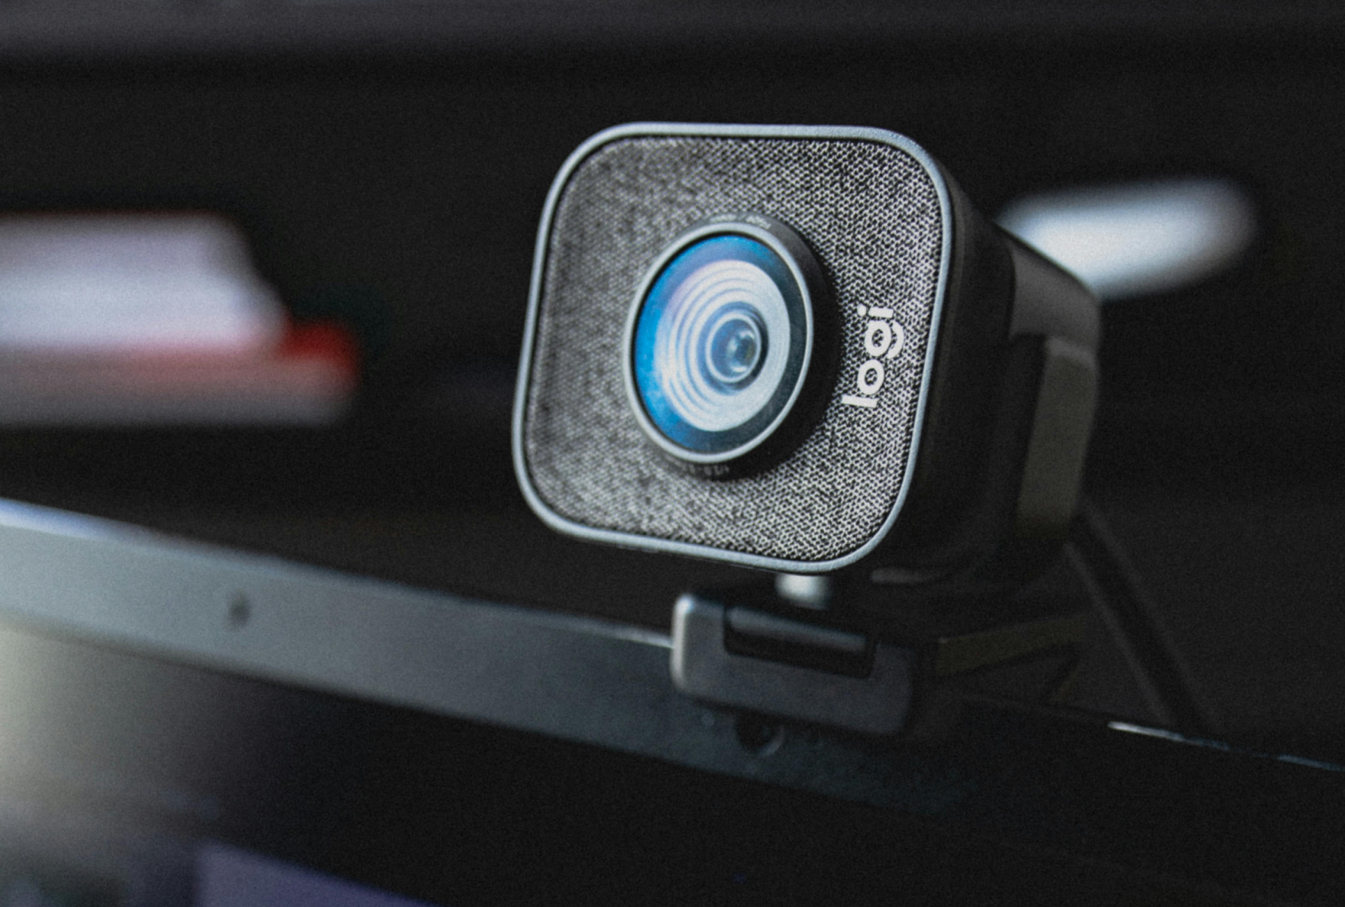 Choosing the Right Logitech Cam: Webcam vs Conference Camera